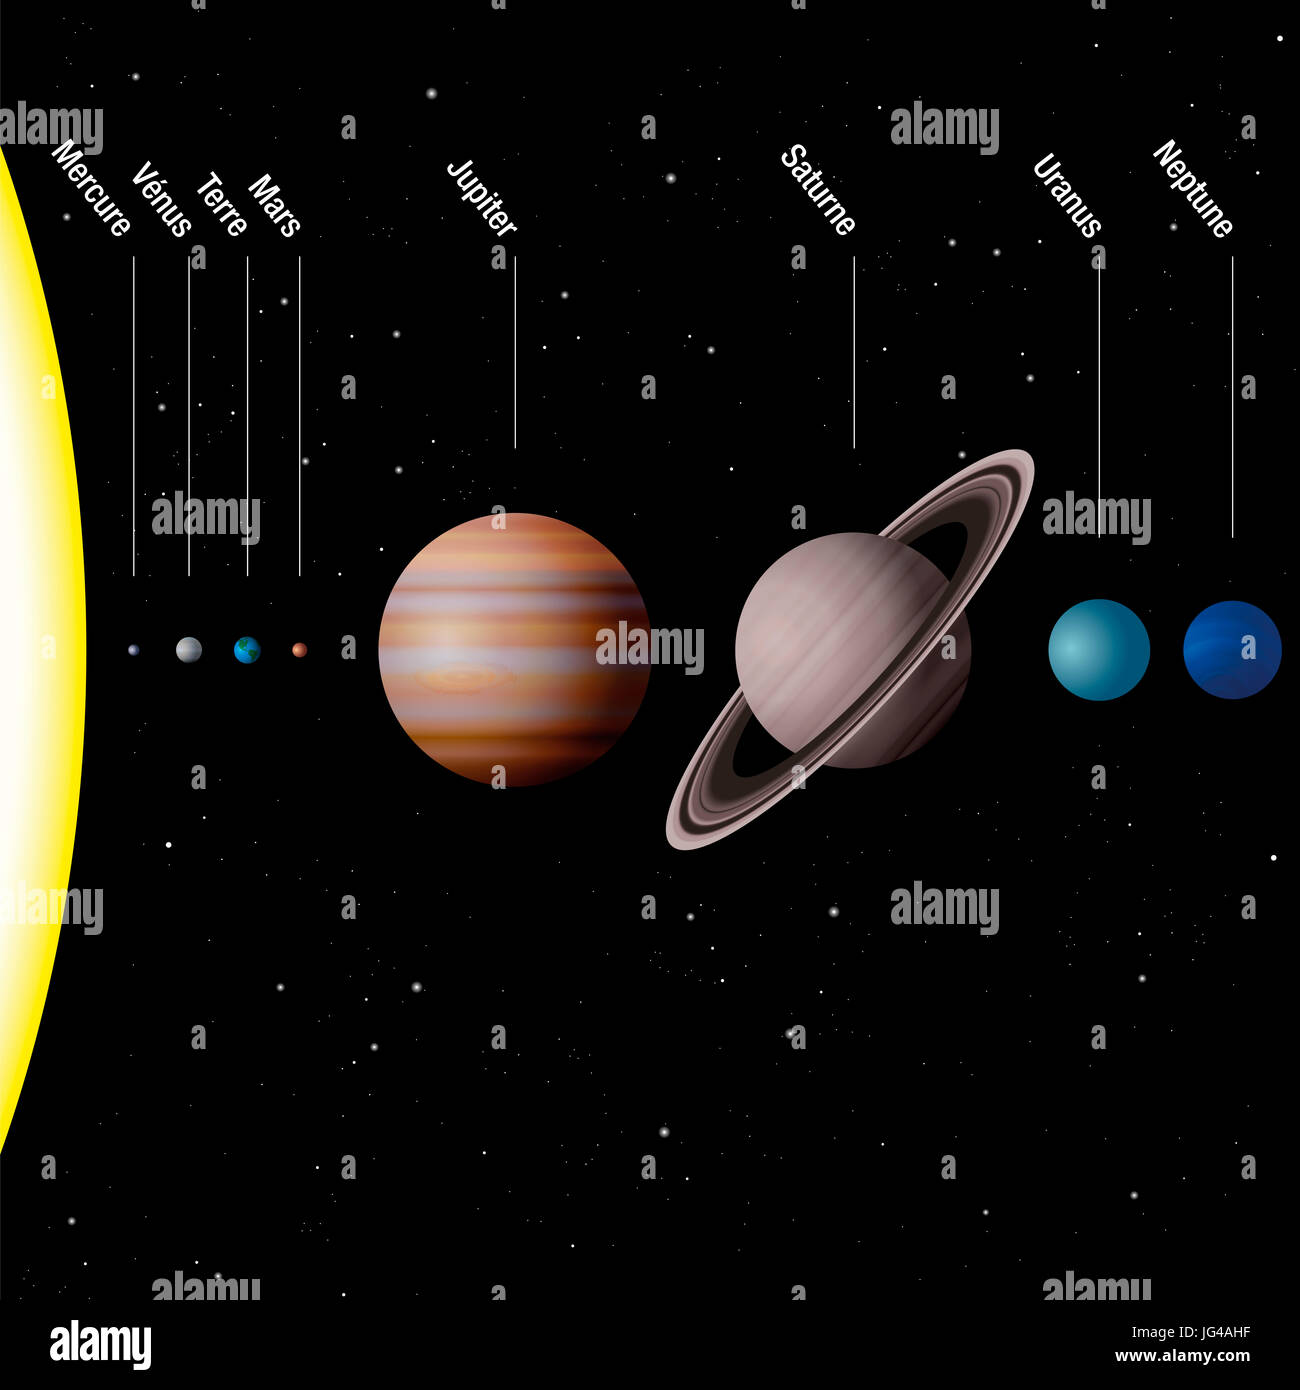 Ocho planetas fotografías e imágenes de alta resolución - Alamy